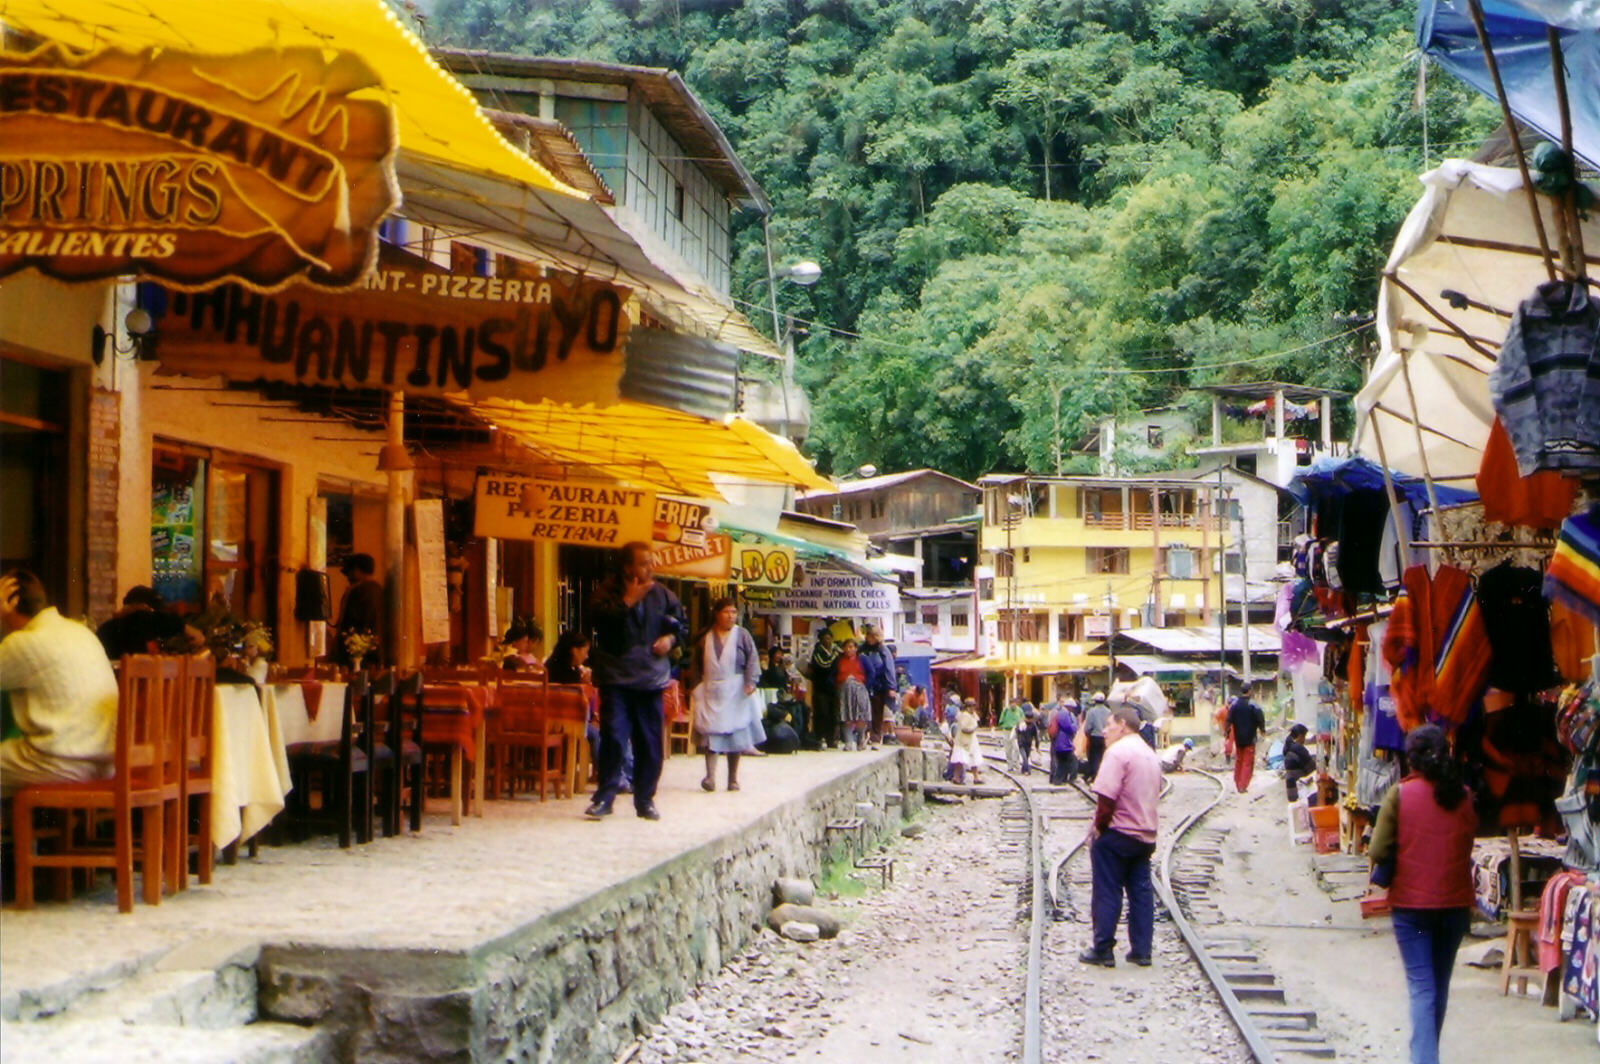 The main 'street' in Aguas Callientes, Peru